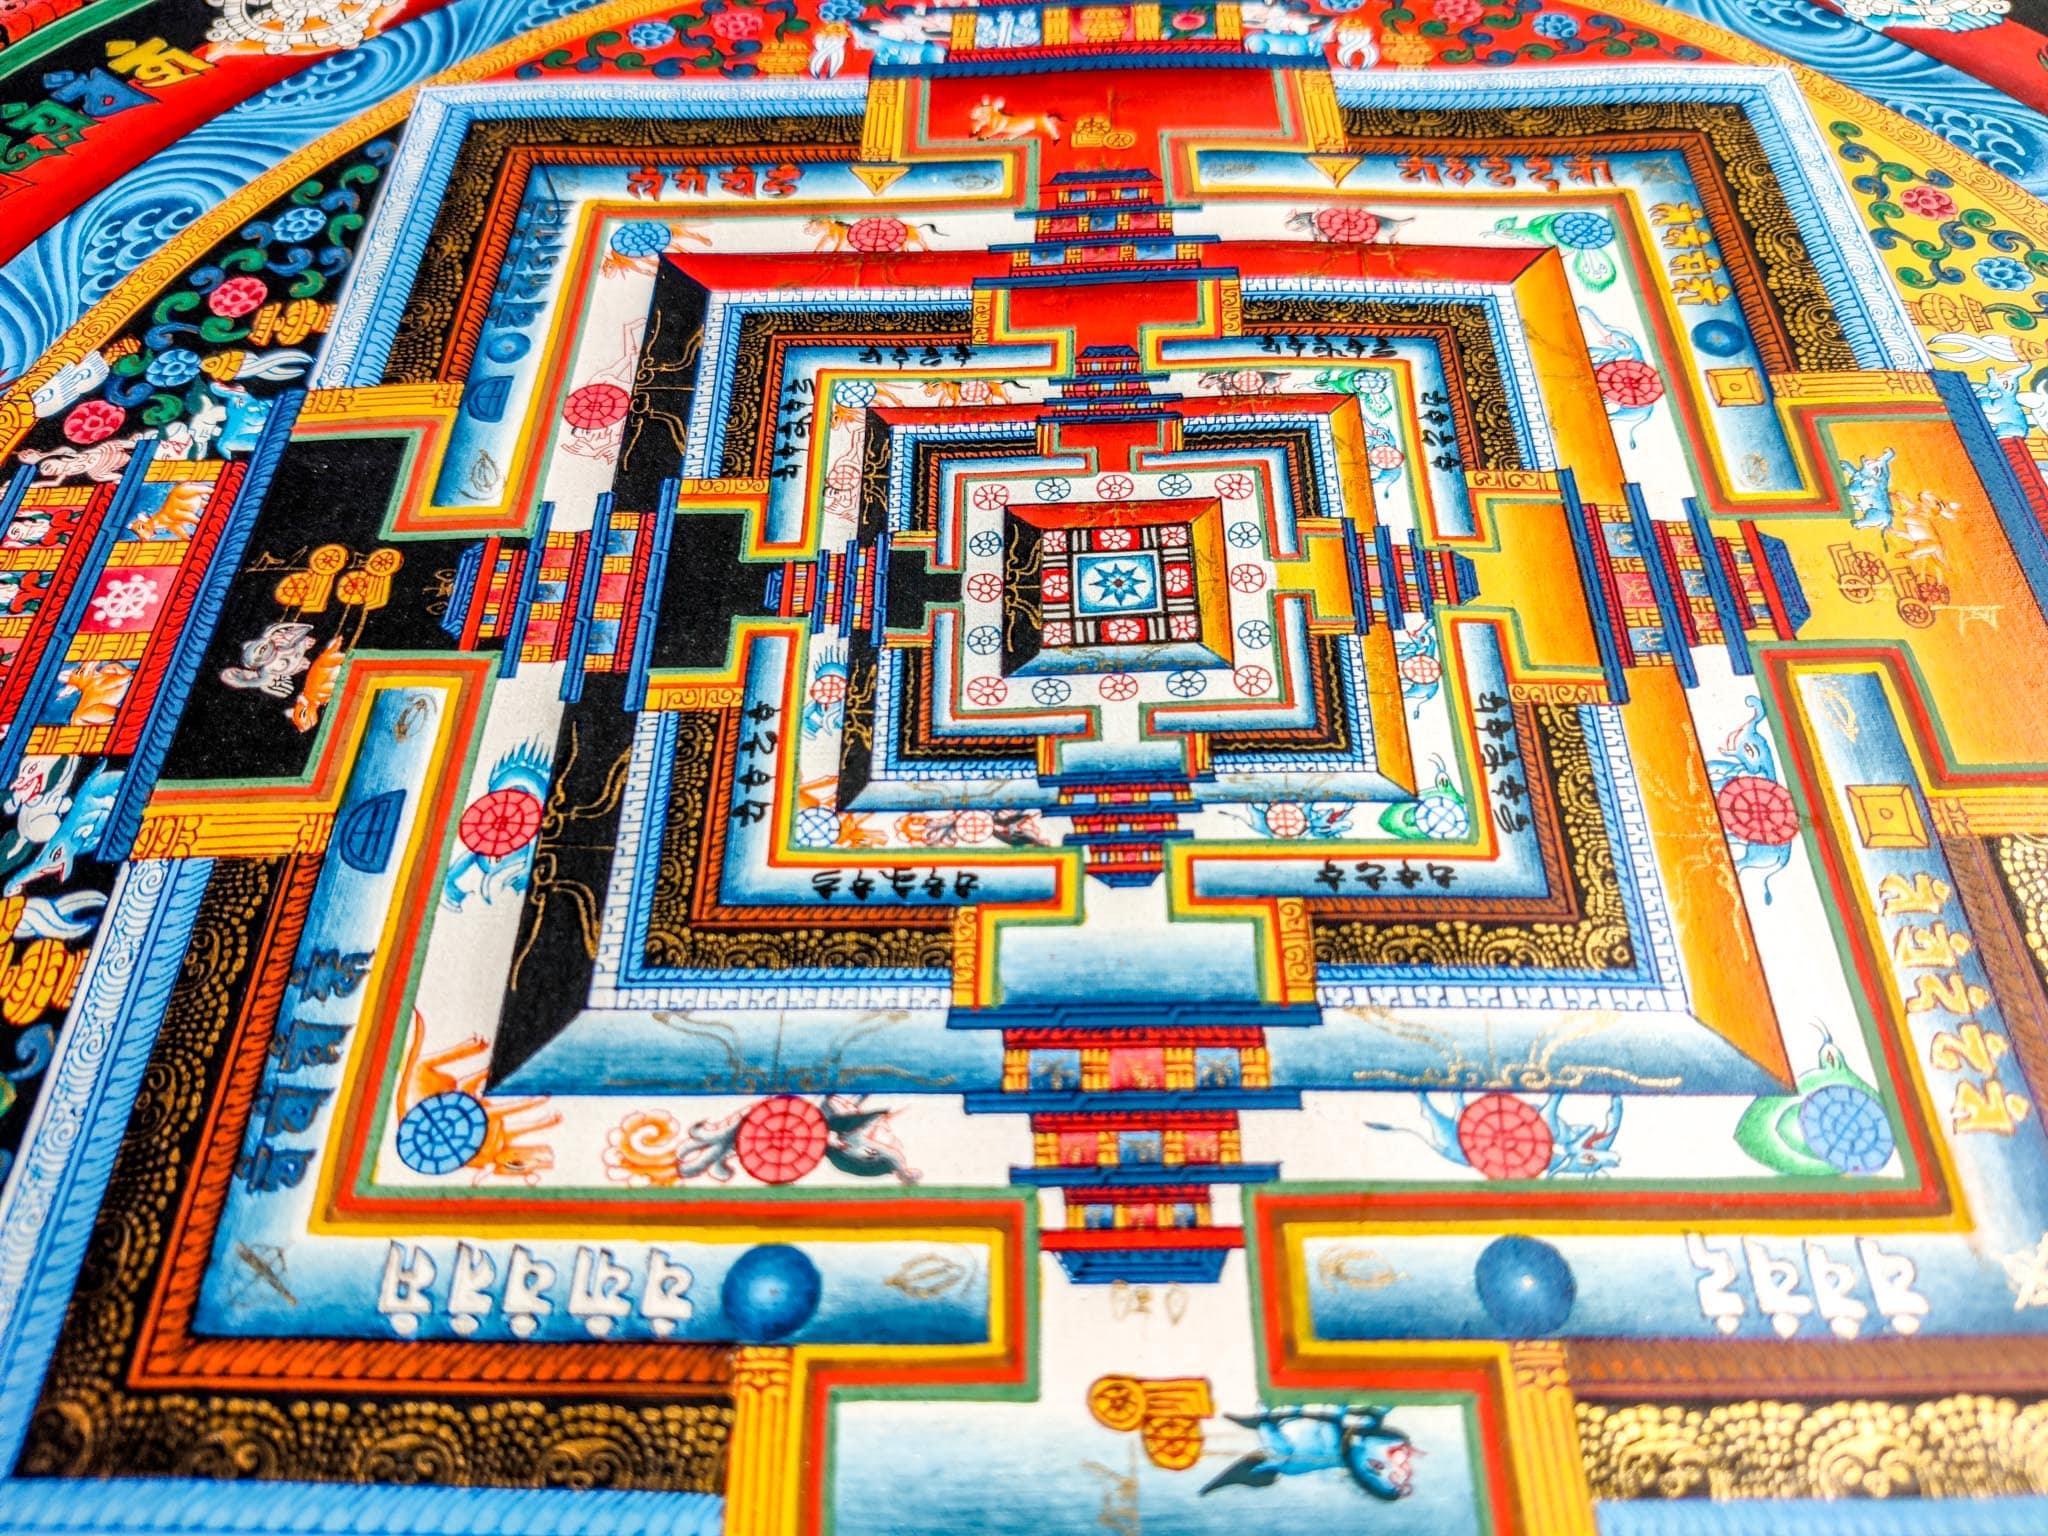 Kalachakra Mandala made by master artist.